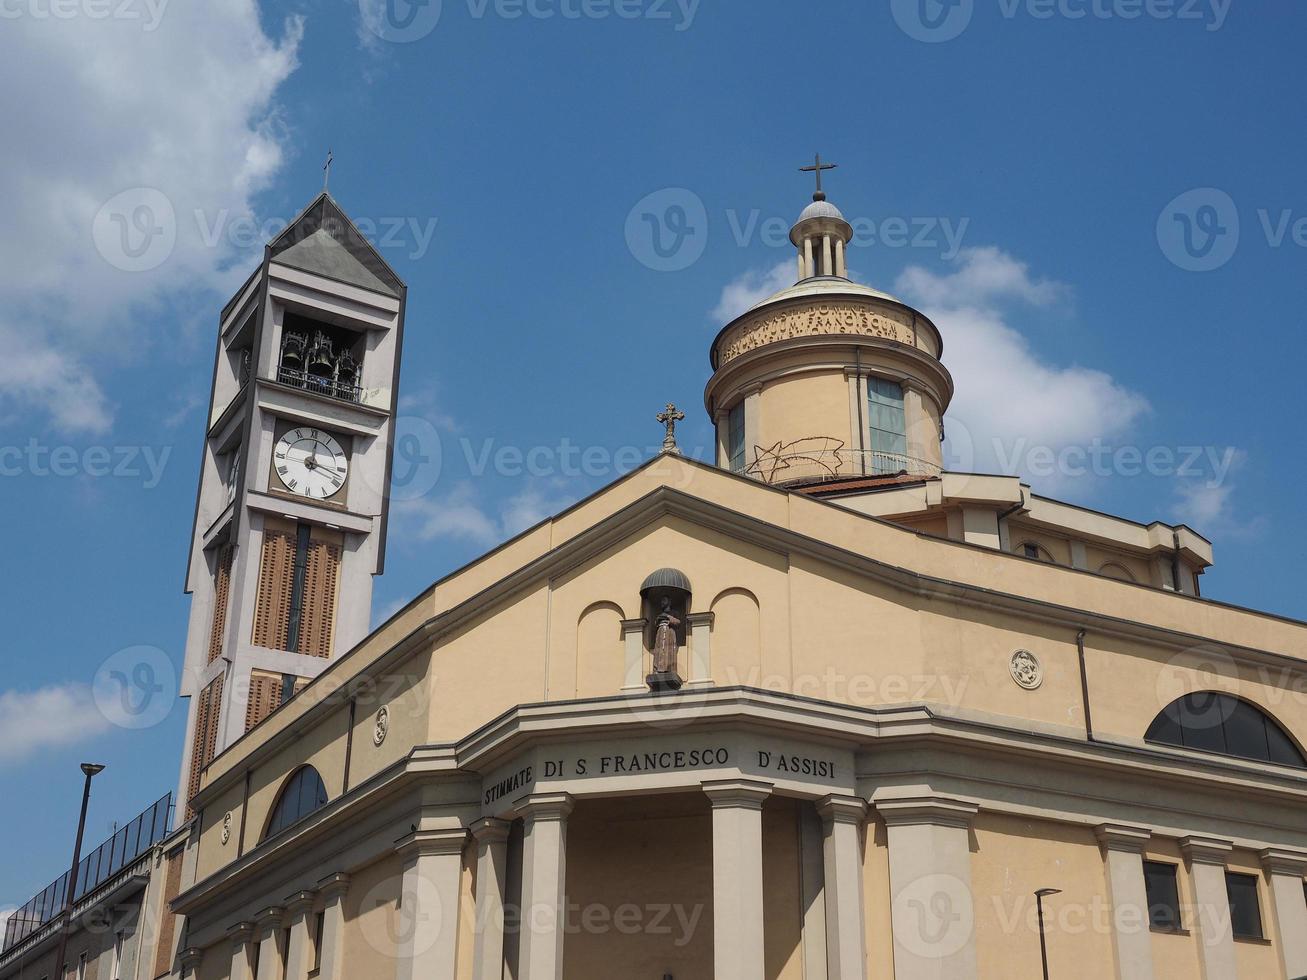 San francesco assisi kyrka i Turin foto